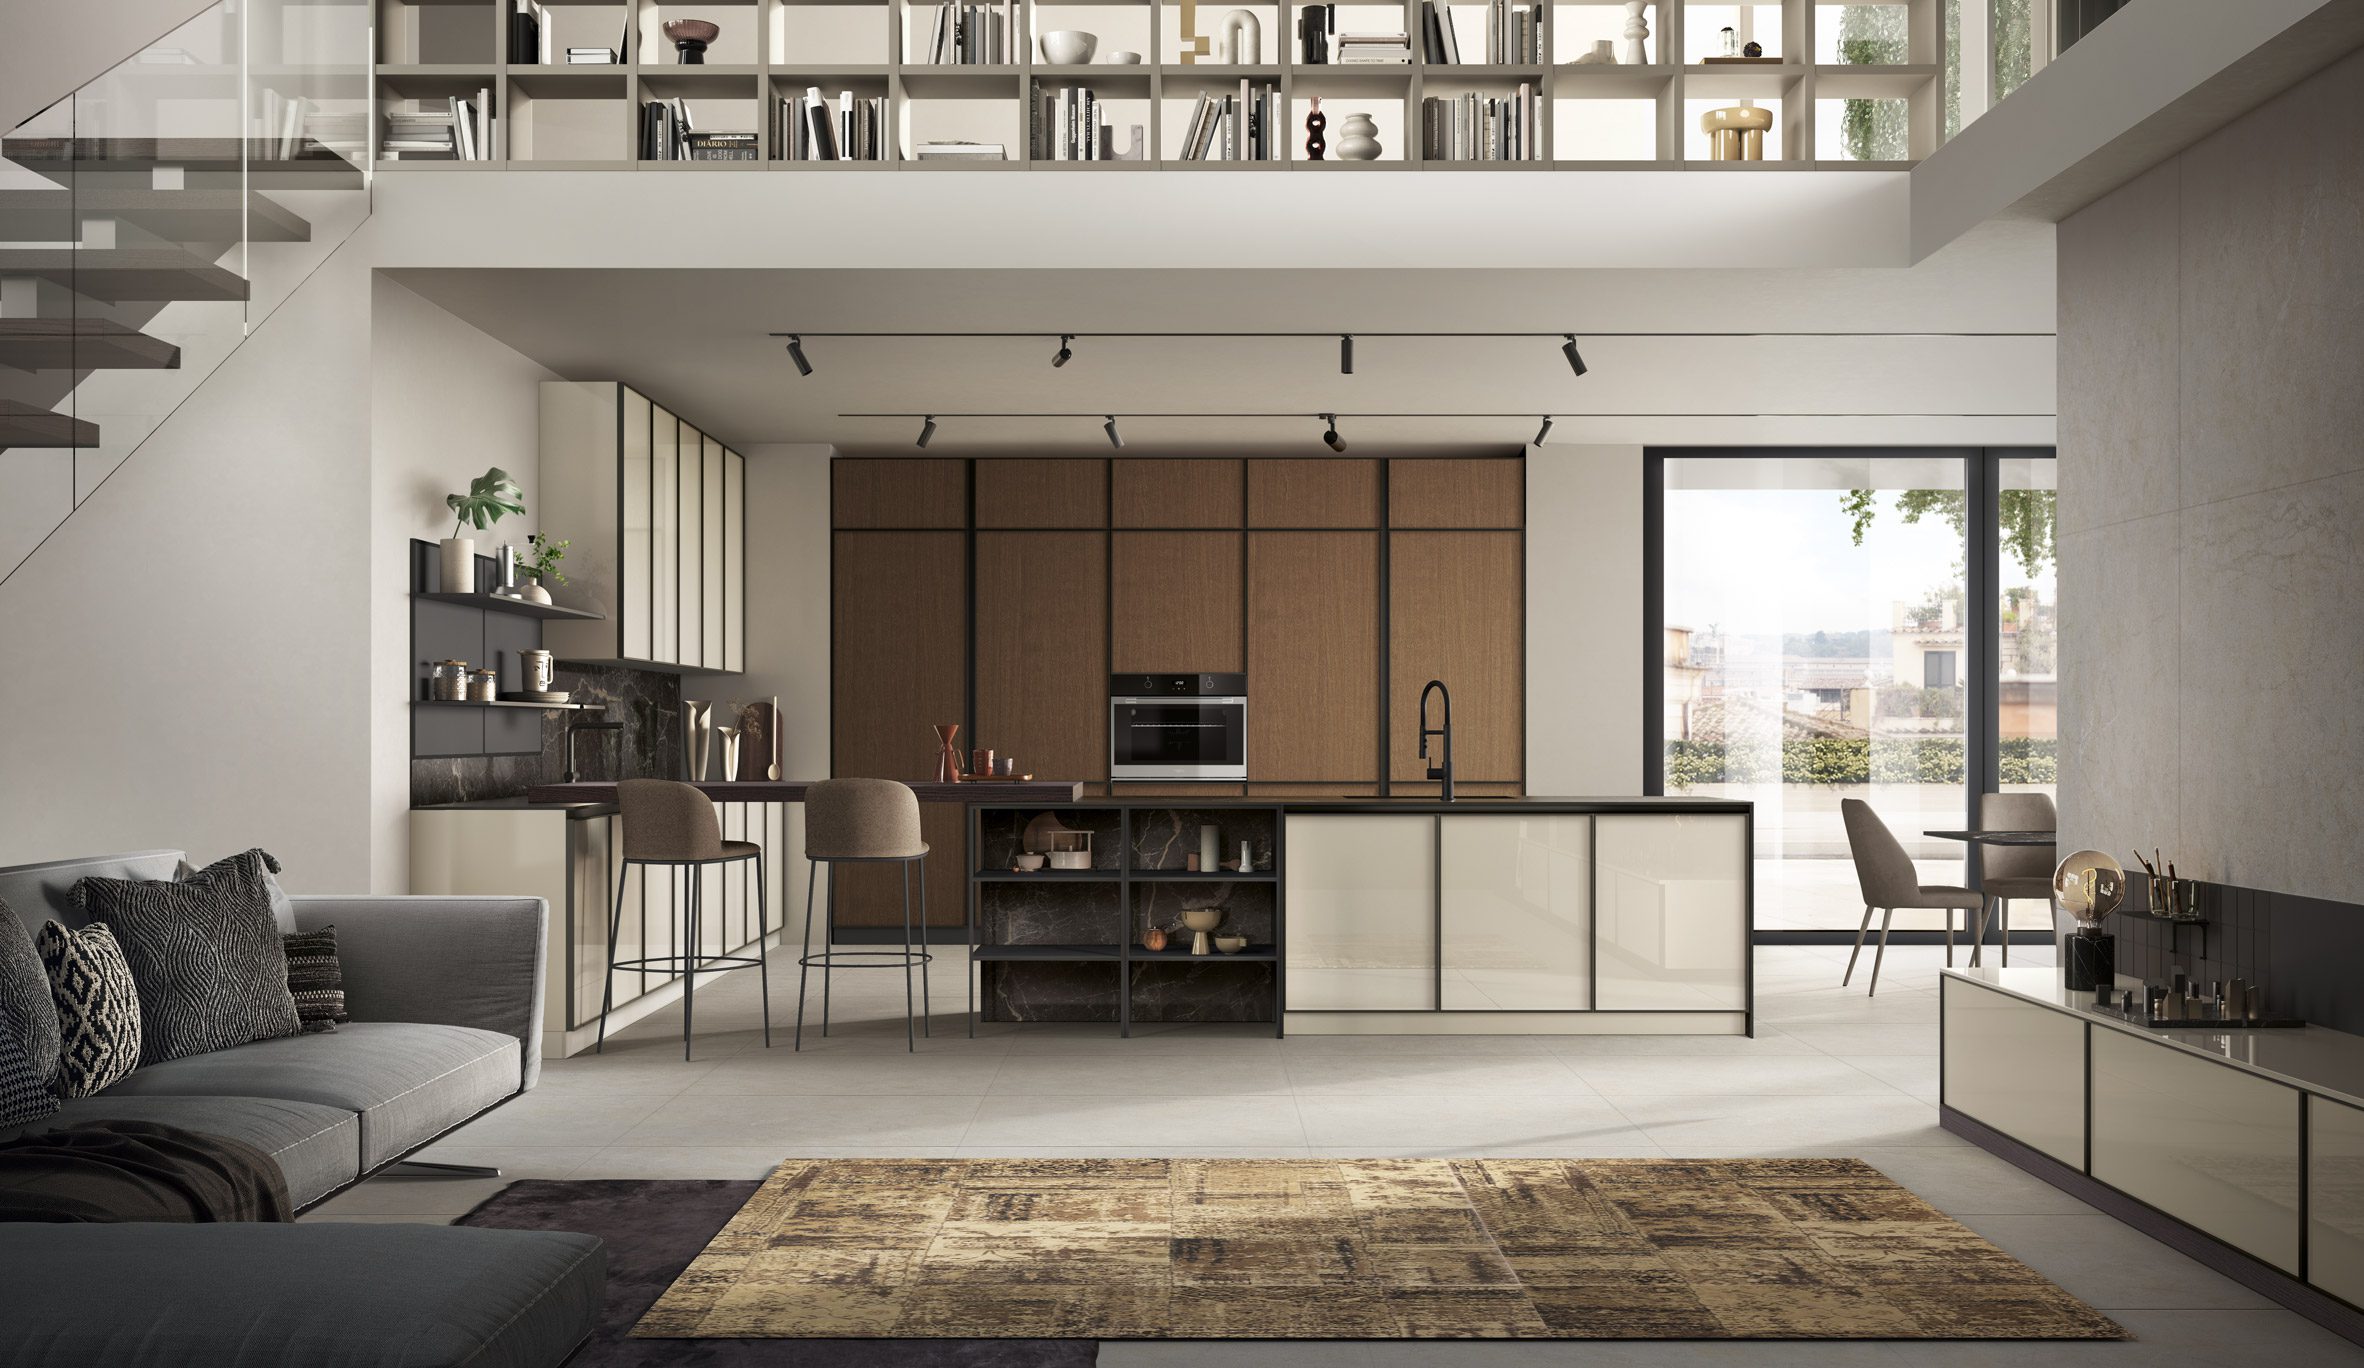 Jeometrica furnishing system by Luca Nichetto for Scavolini